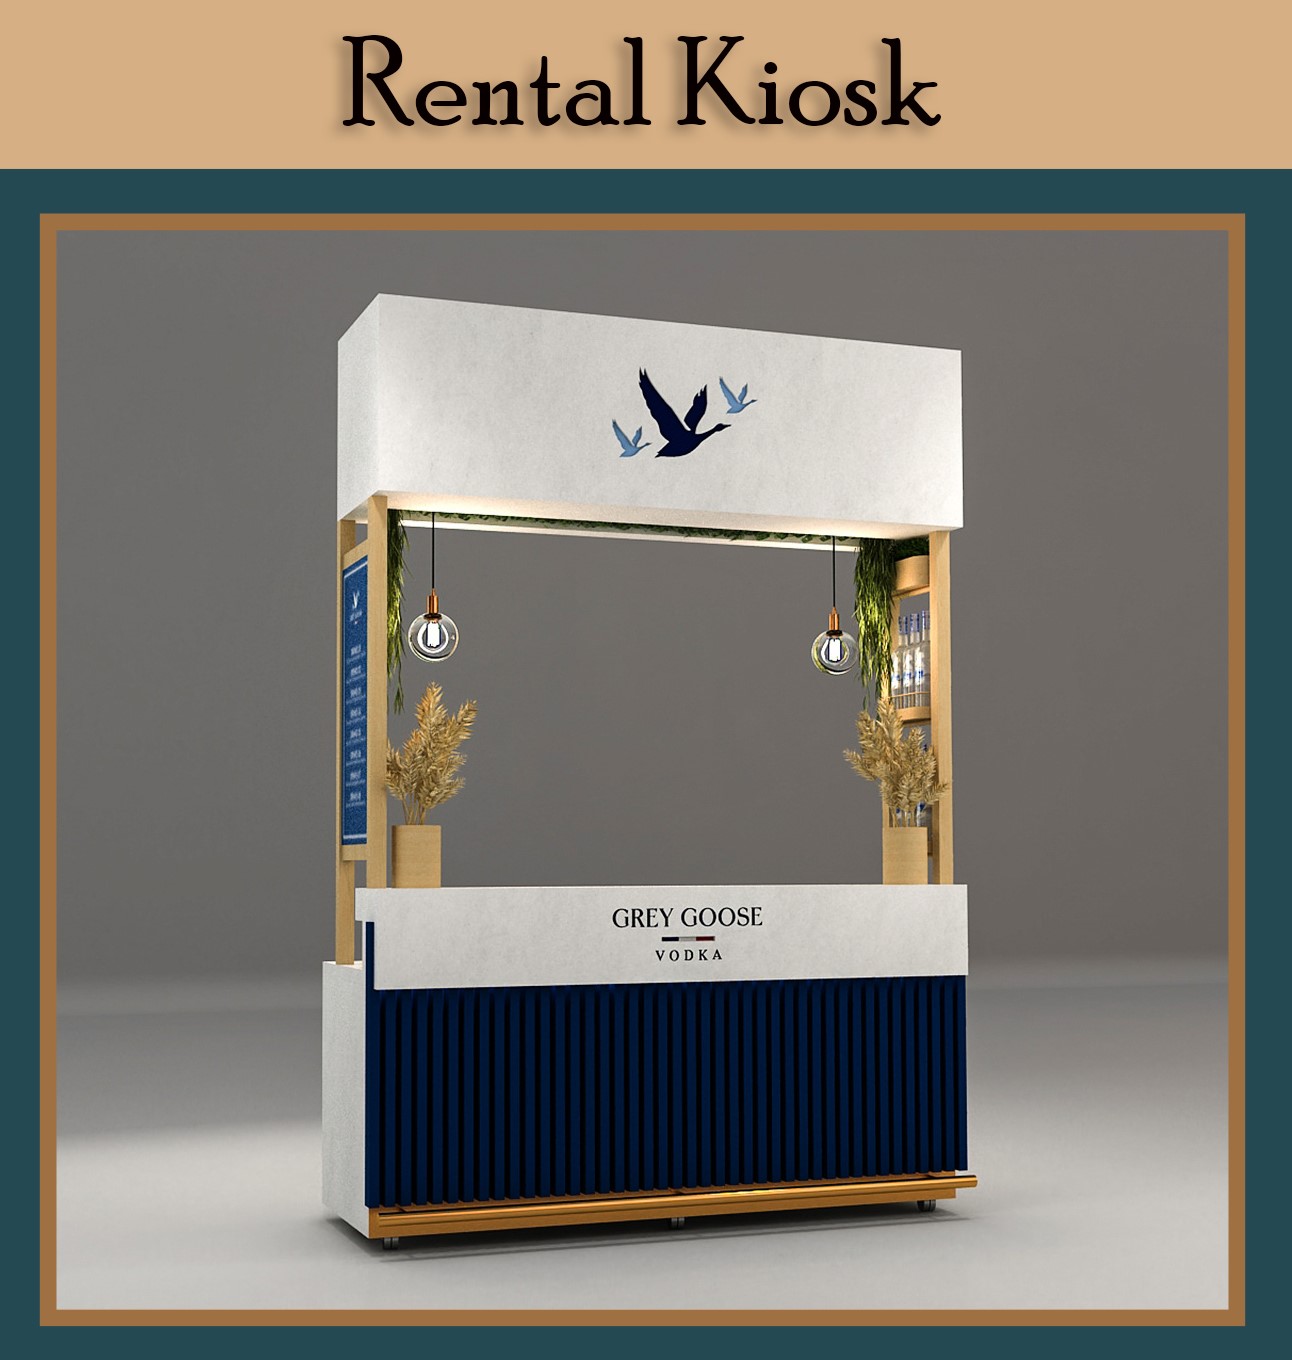 Rental Kiosk Suppliers Abu Dhabi | Rental Kiosk Company in UAE